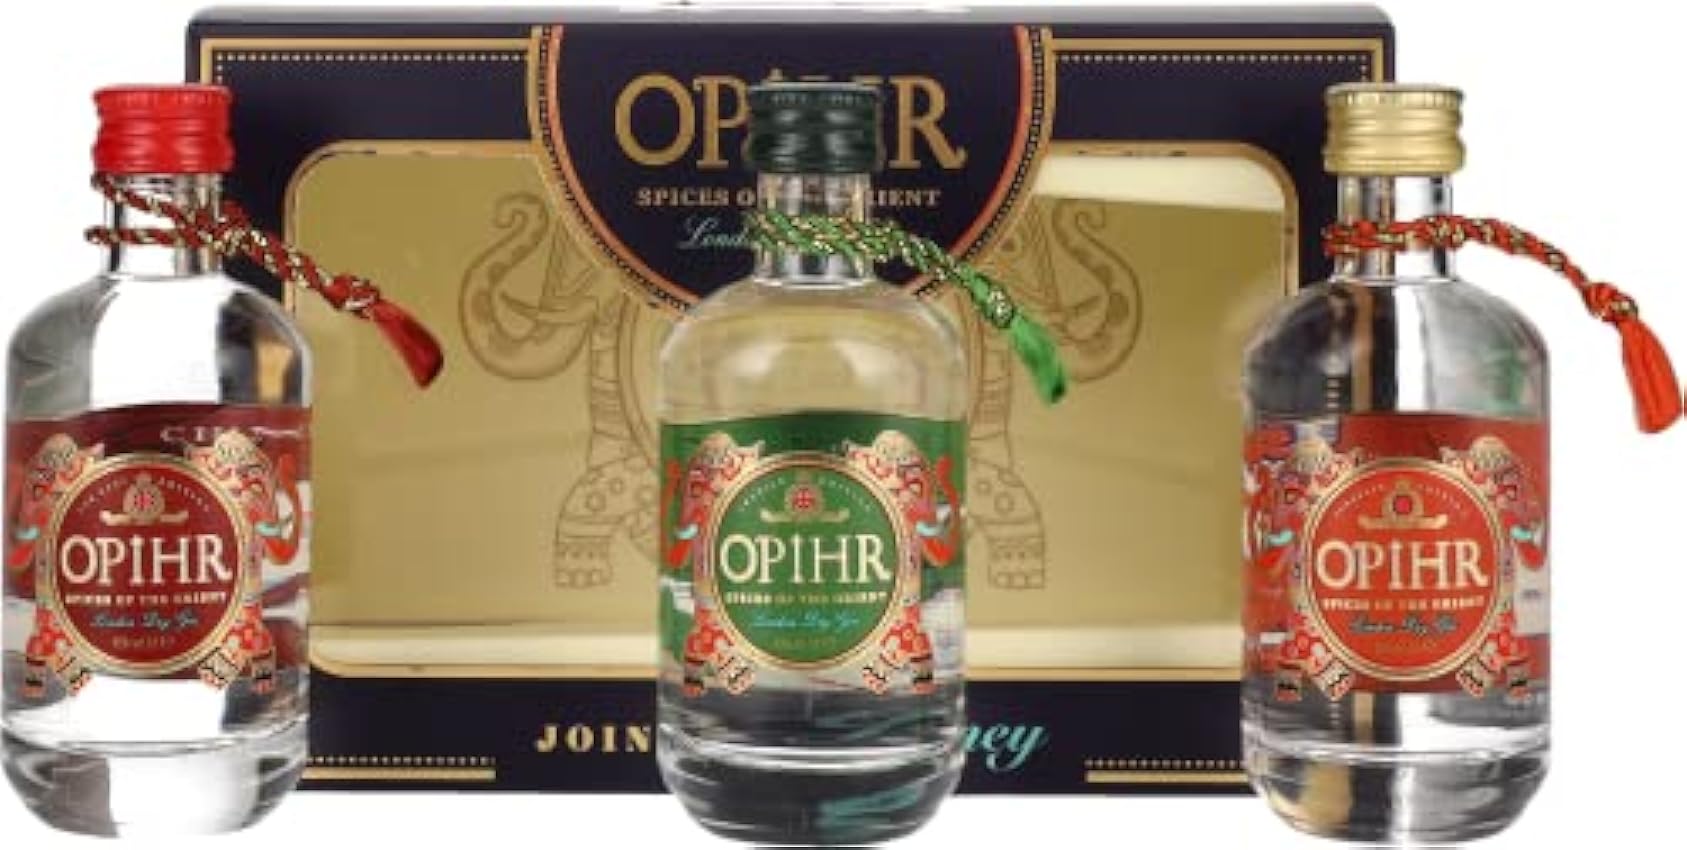 Opihr Gin SPICES OF THE ORIENT London Dry Gin Miniset 43% Vol. 3x0,05l dbr2ak99